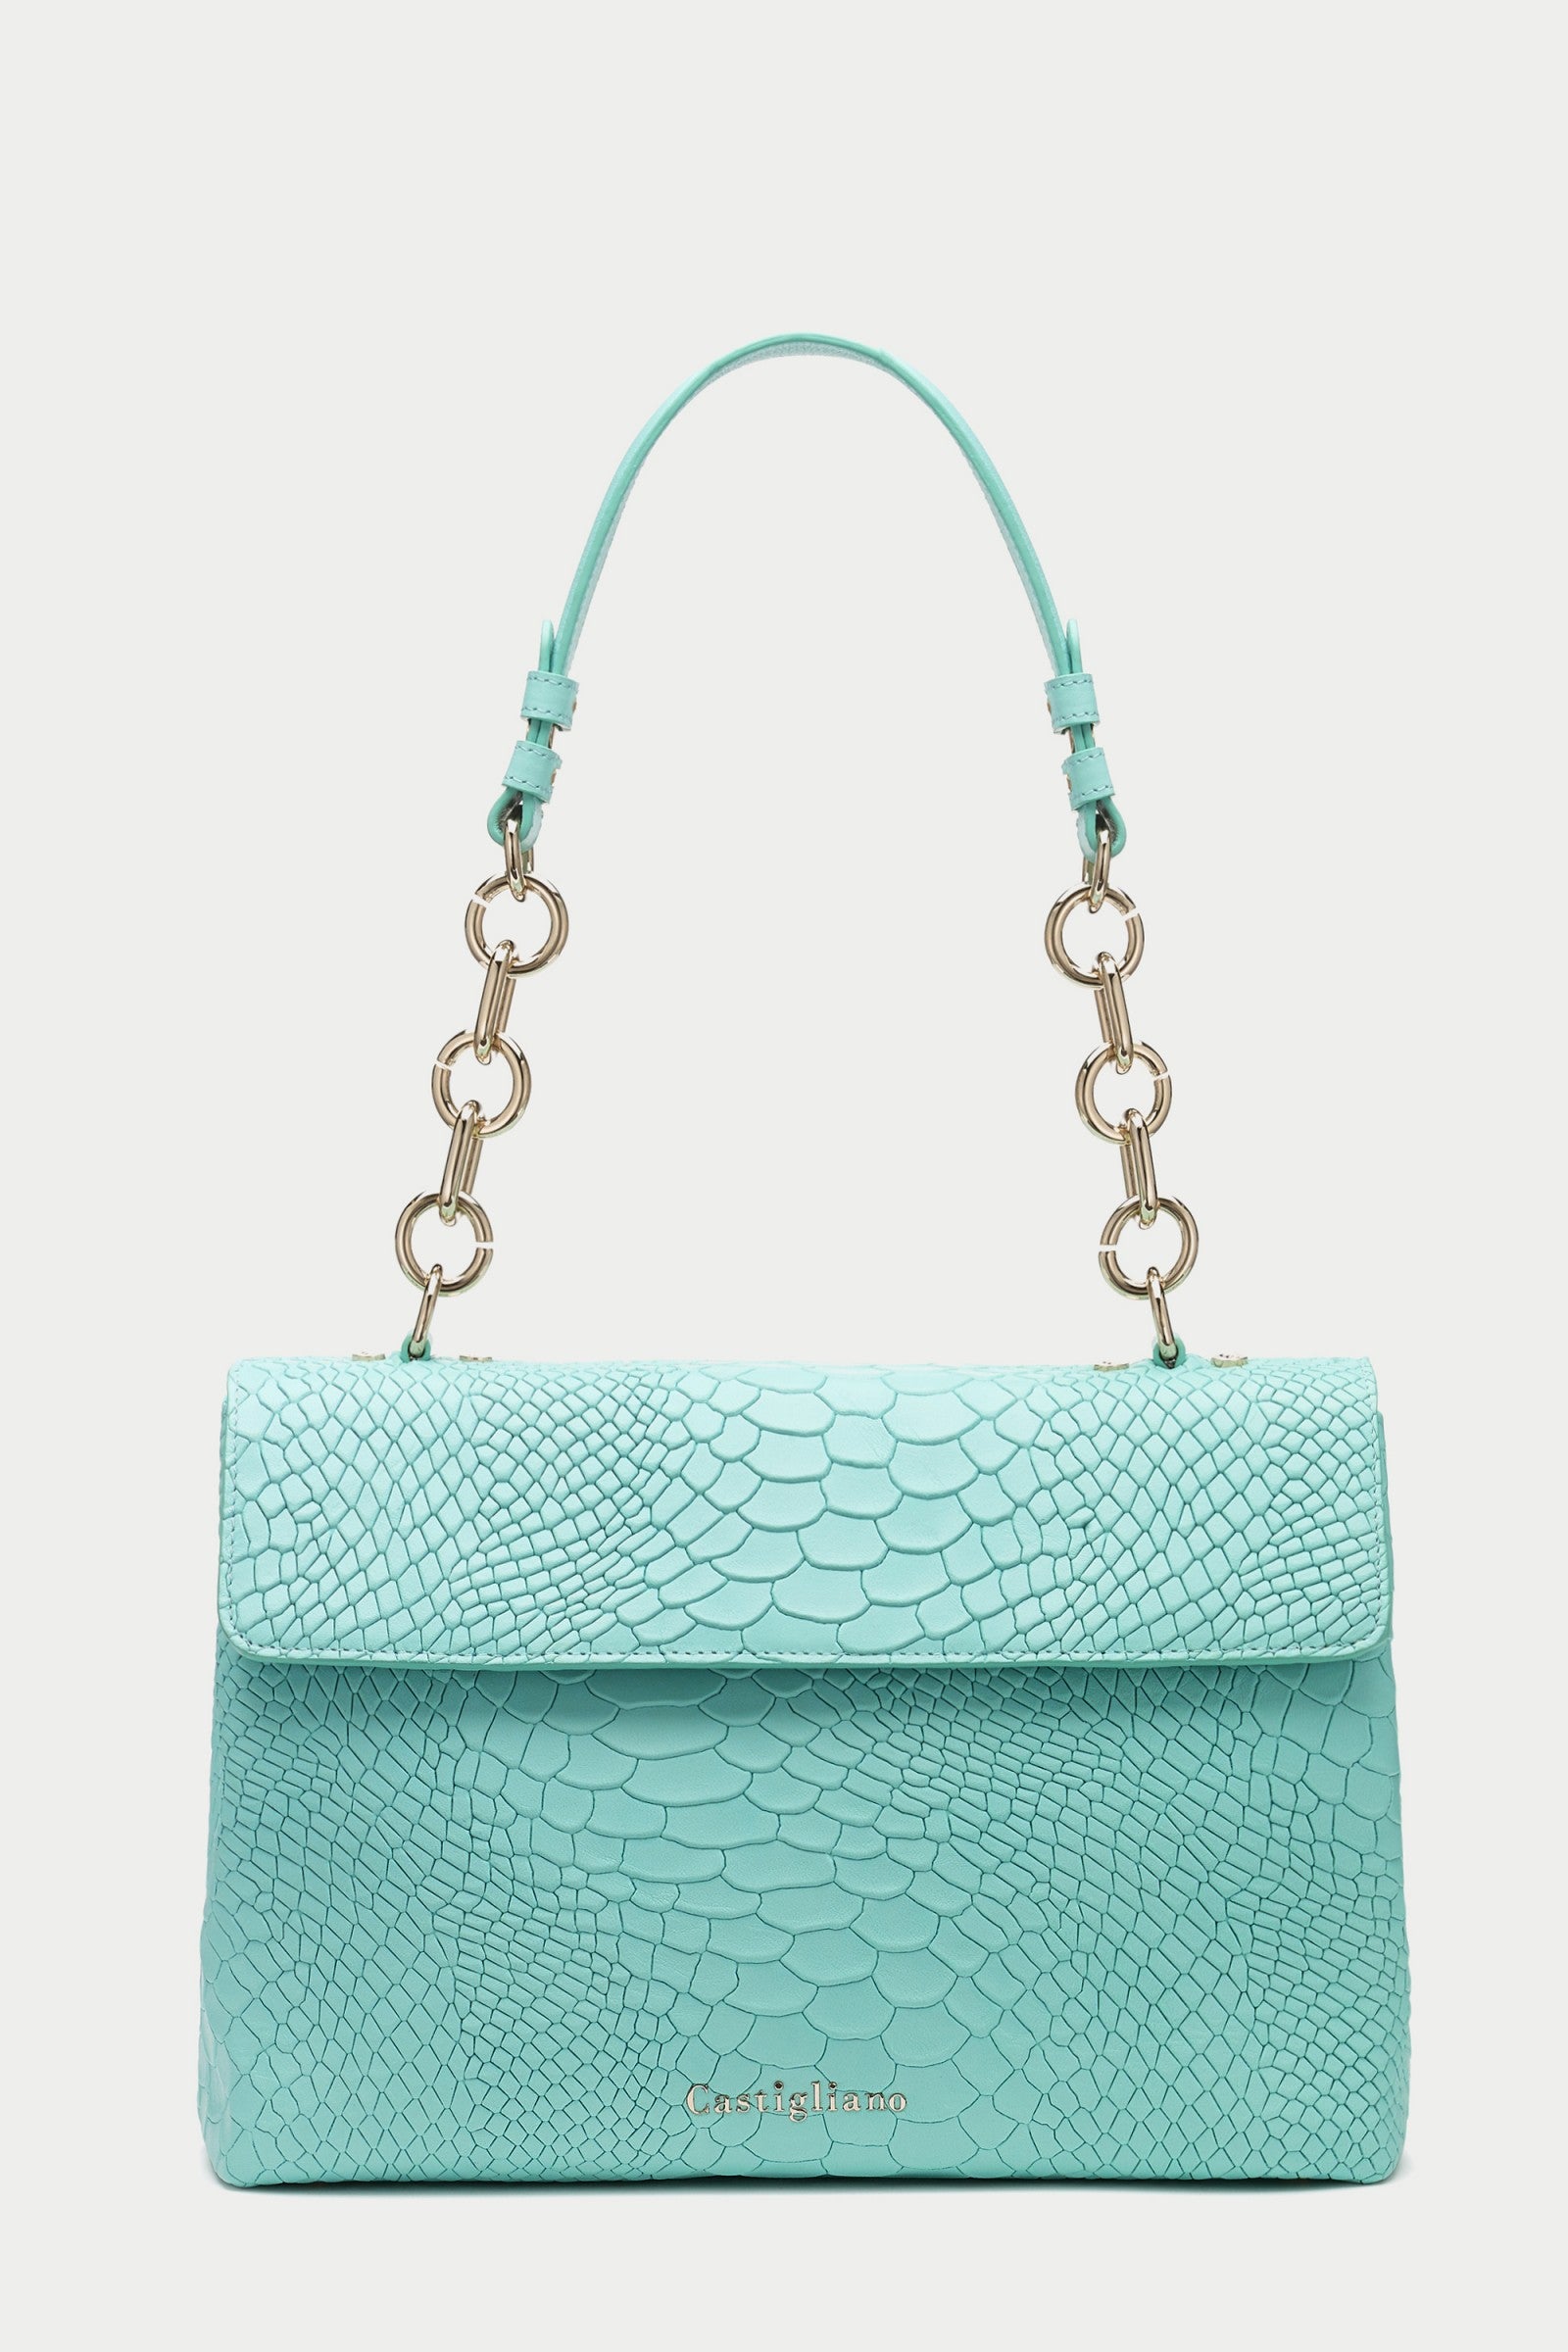 Briella ANACONDA BLUE LUCE Leather Handbag